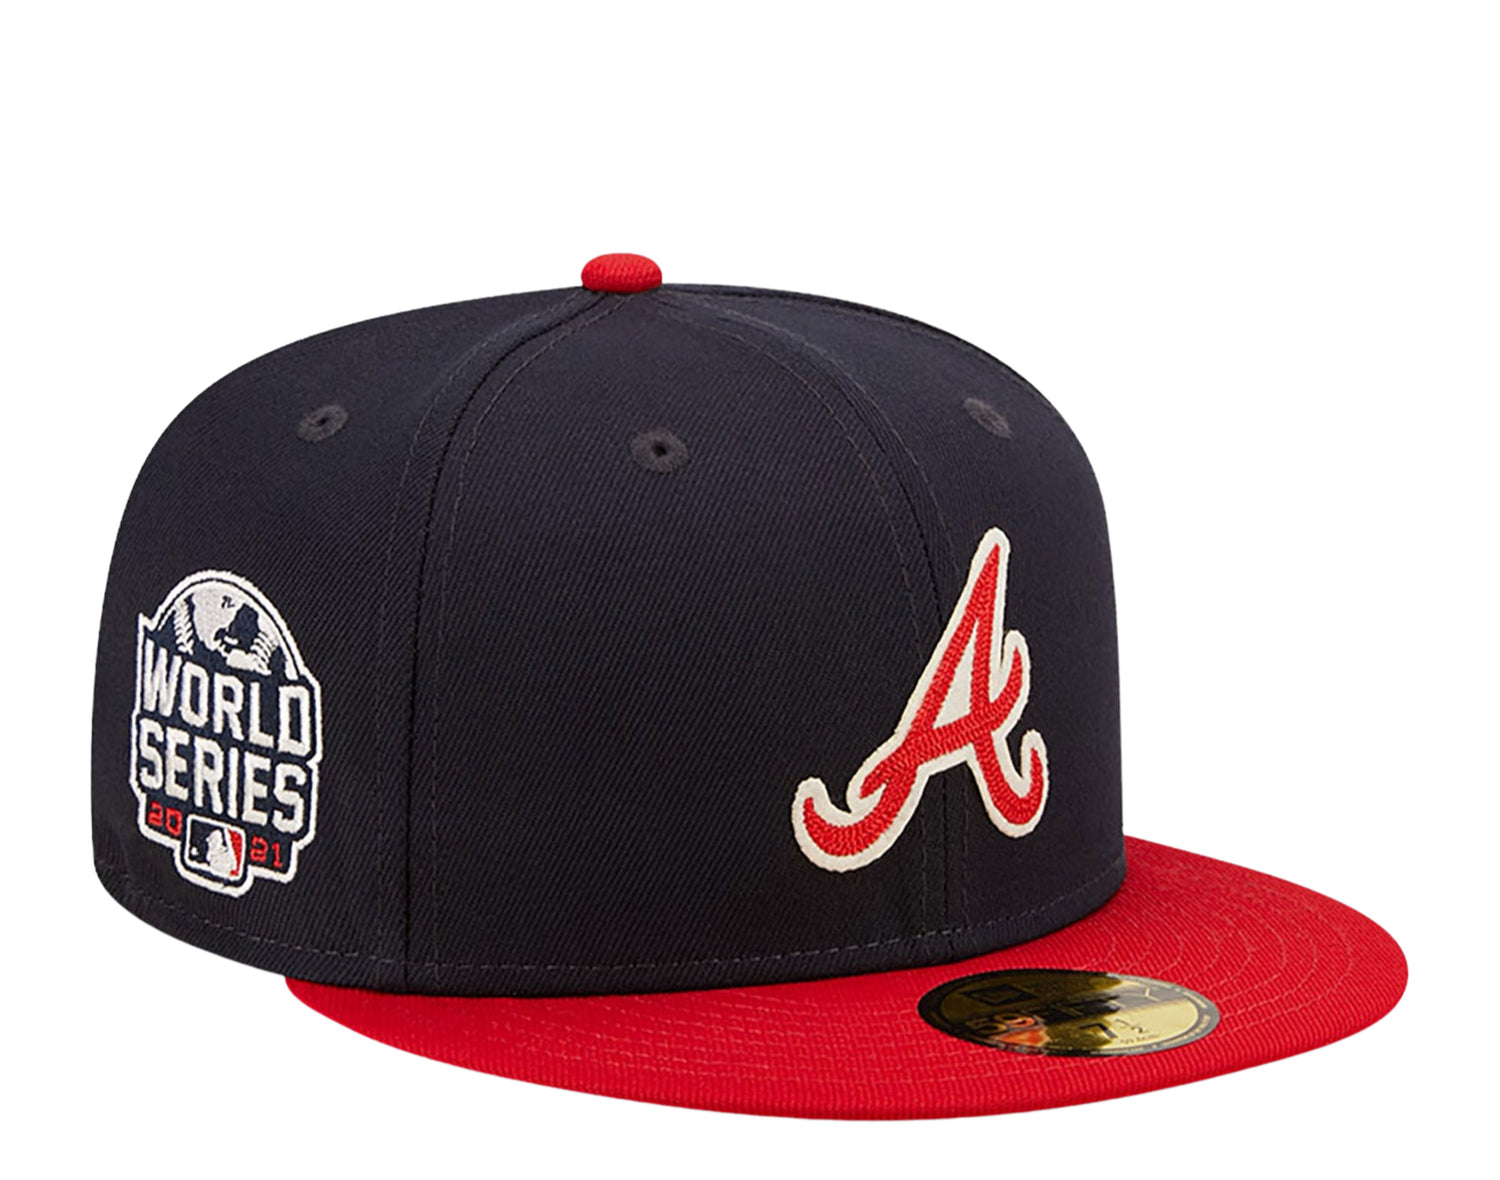 New Era 59Fifty MLB Atlanta Braves Letterman Fitted Hat